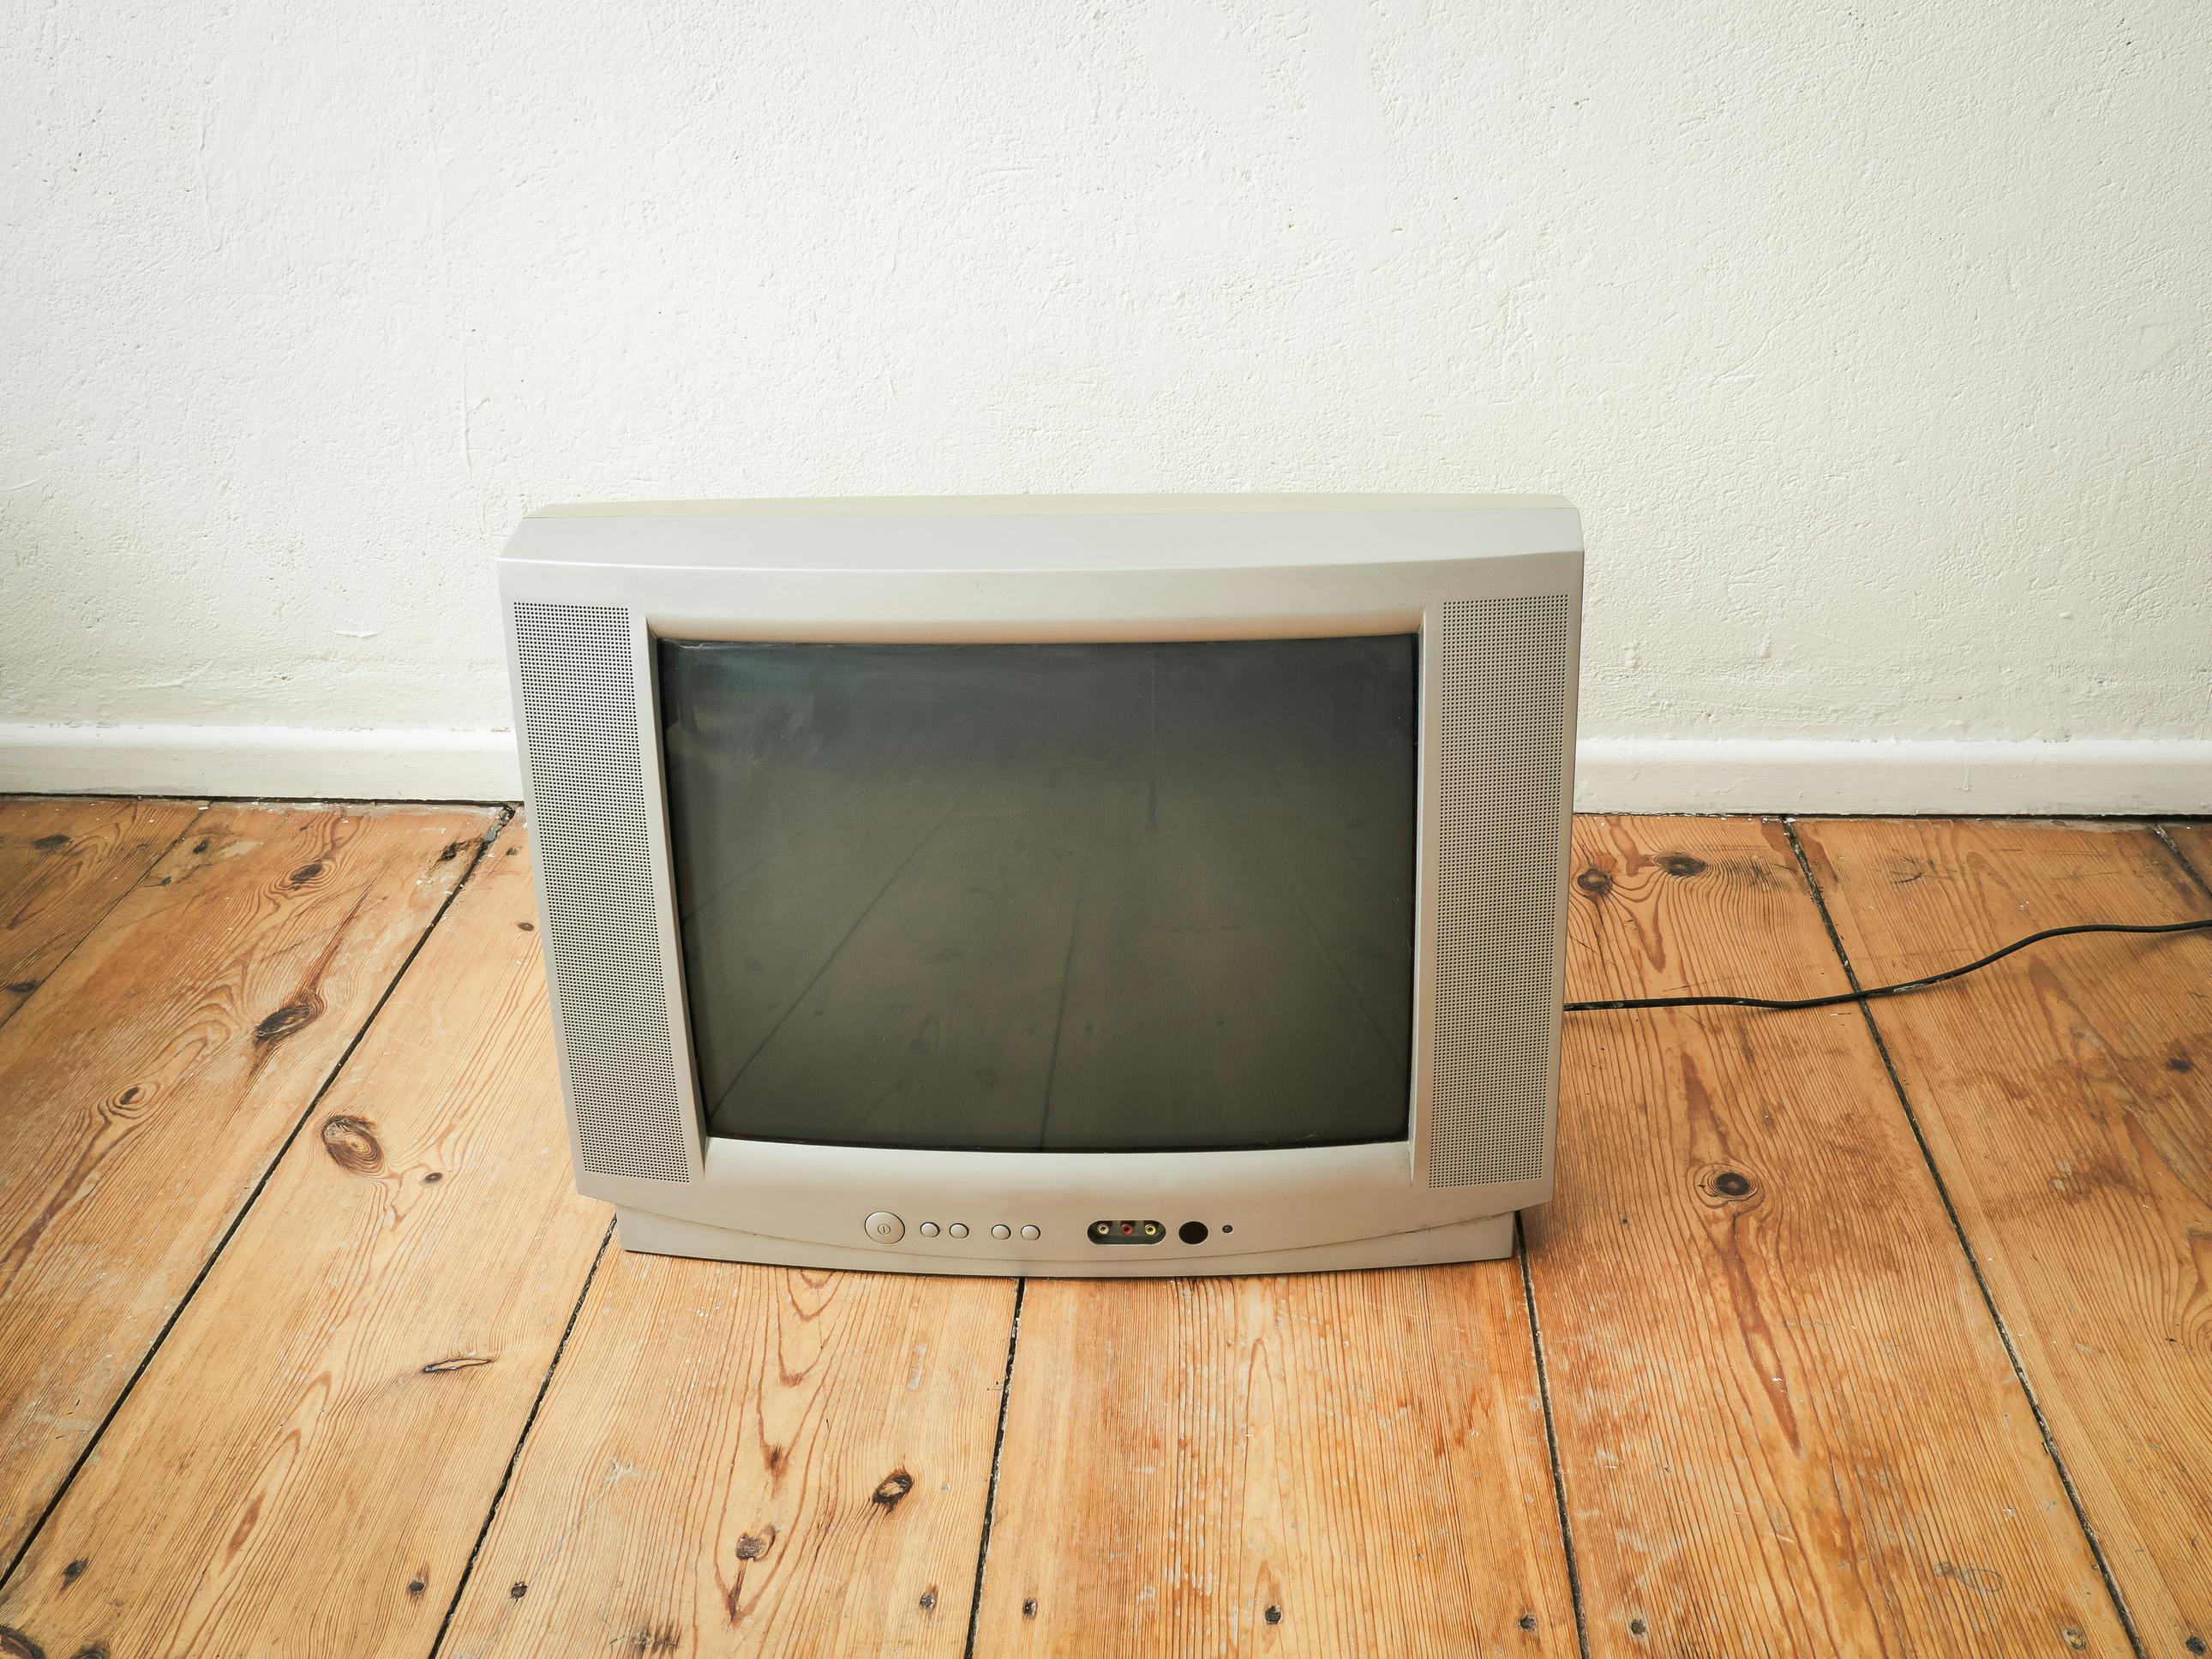 CRT TV on a wooden floor